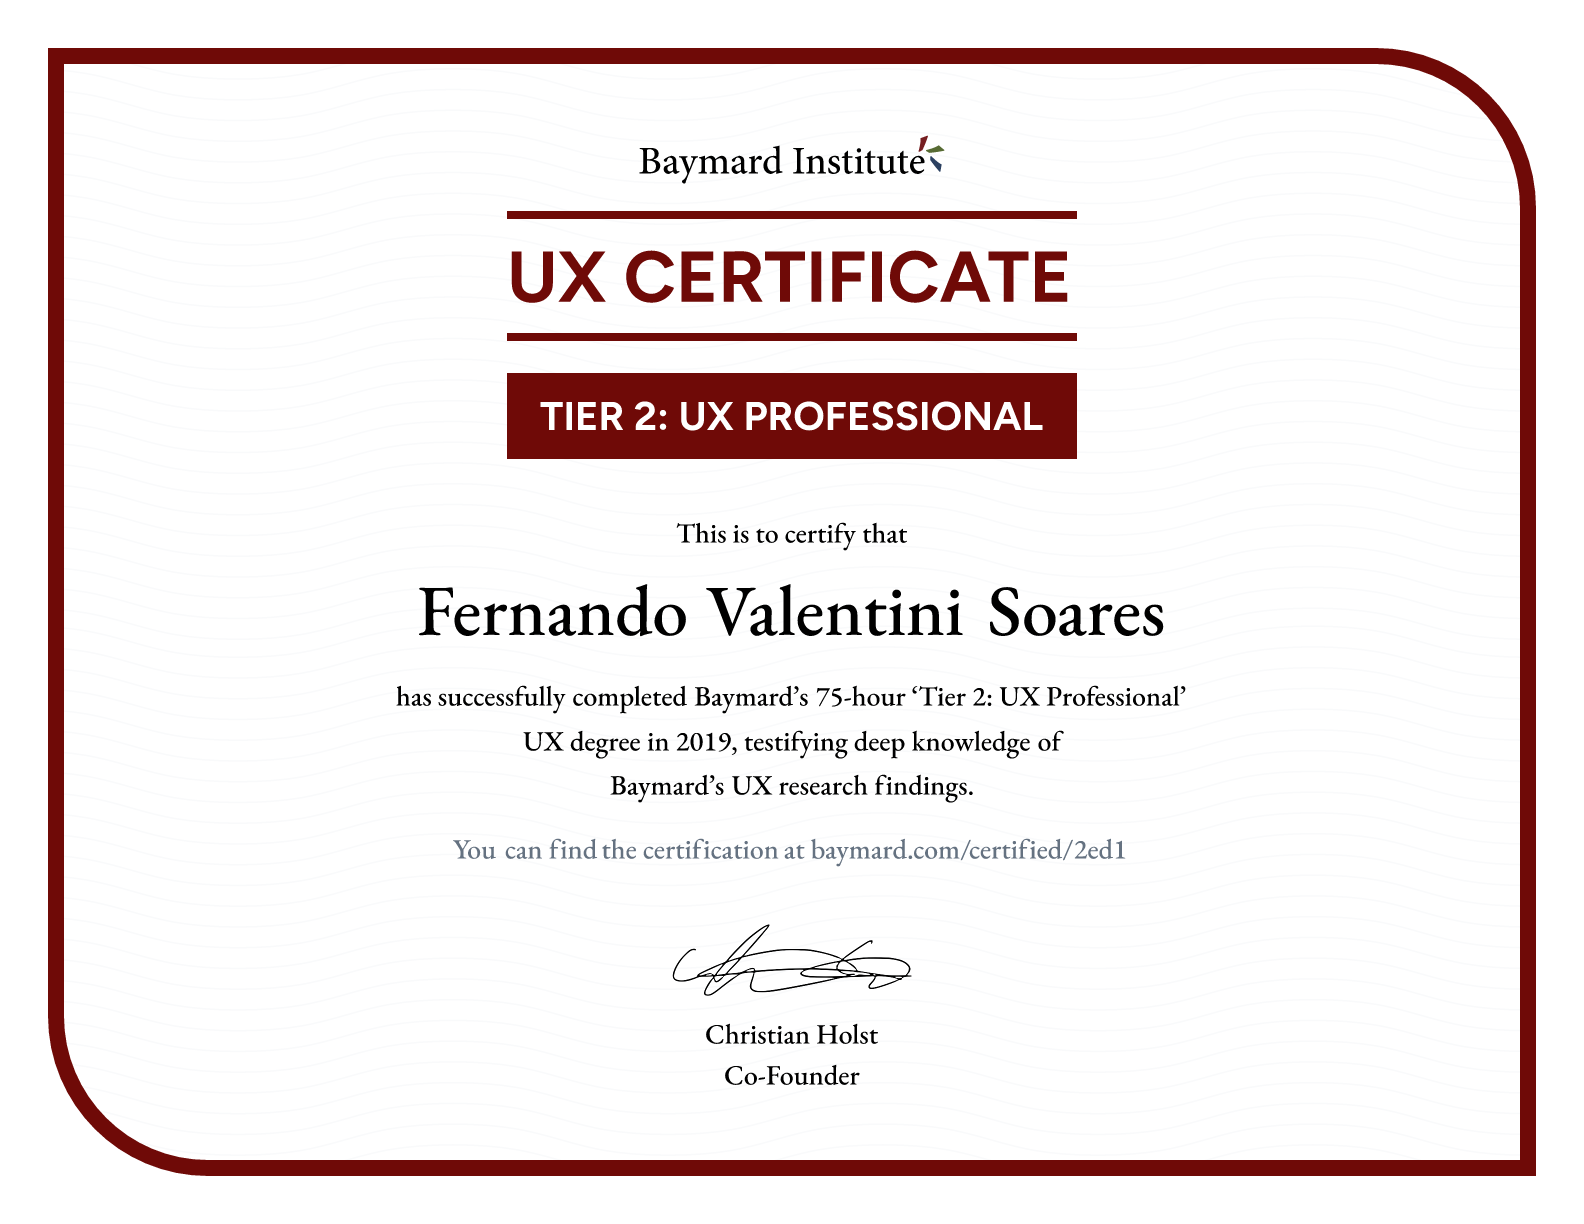 Fernando Valentini Soares’s certificate